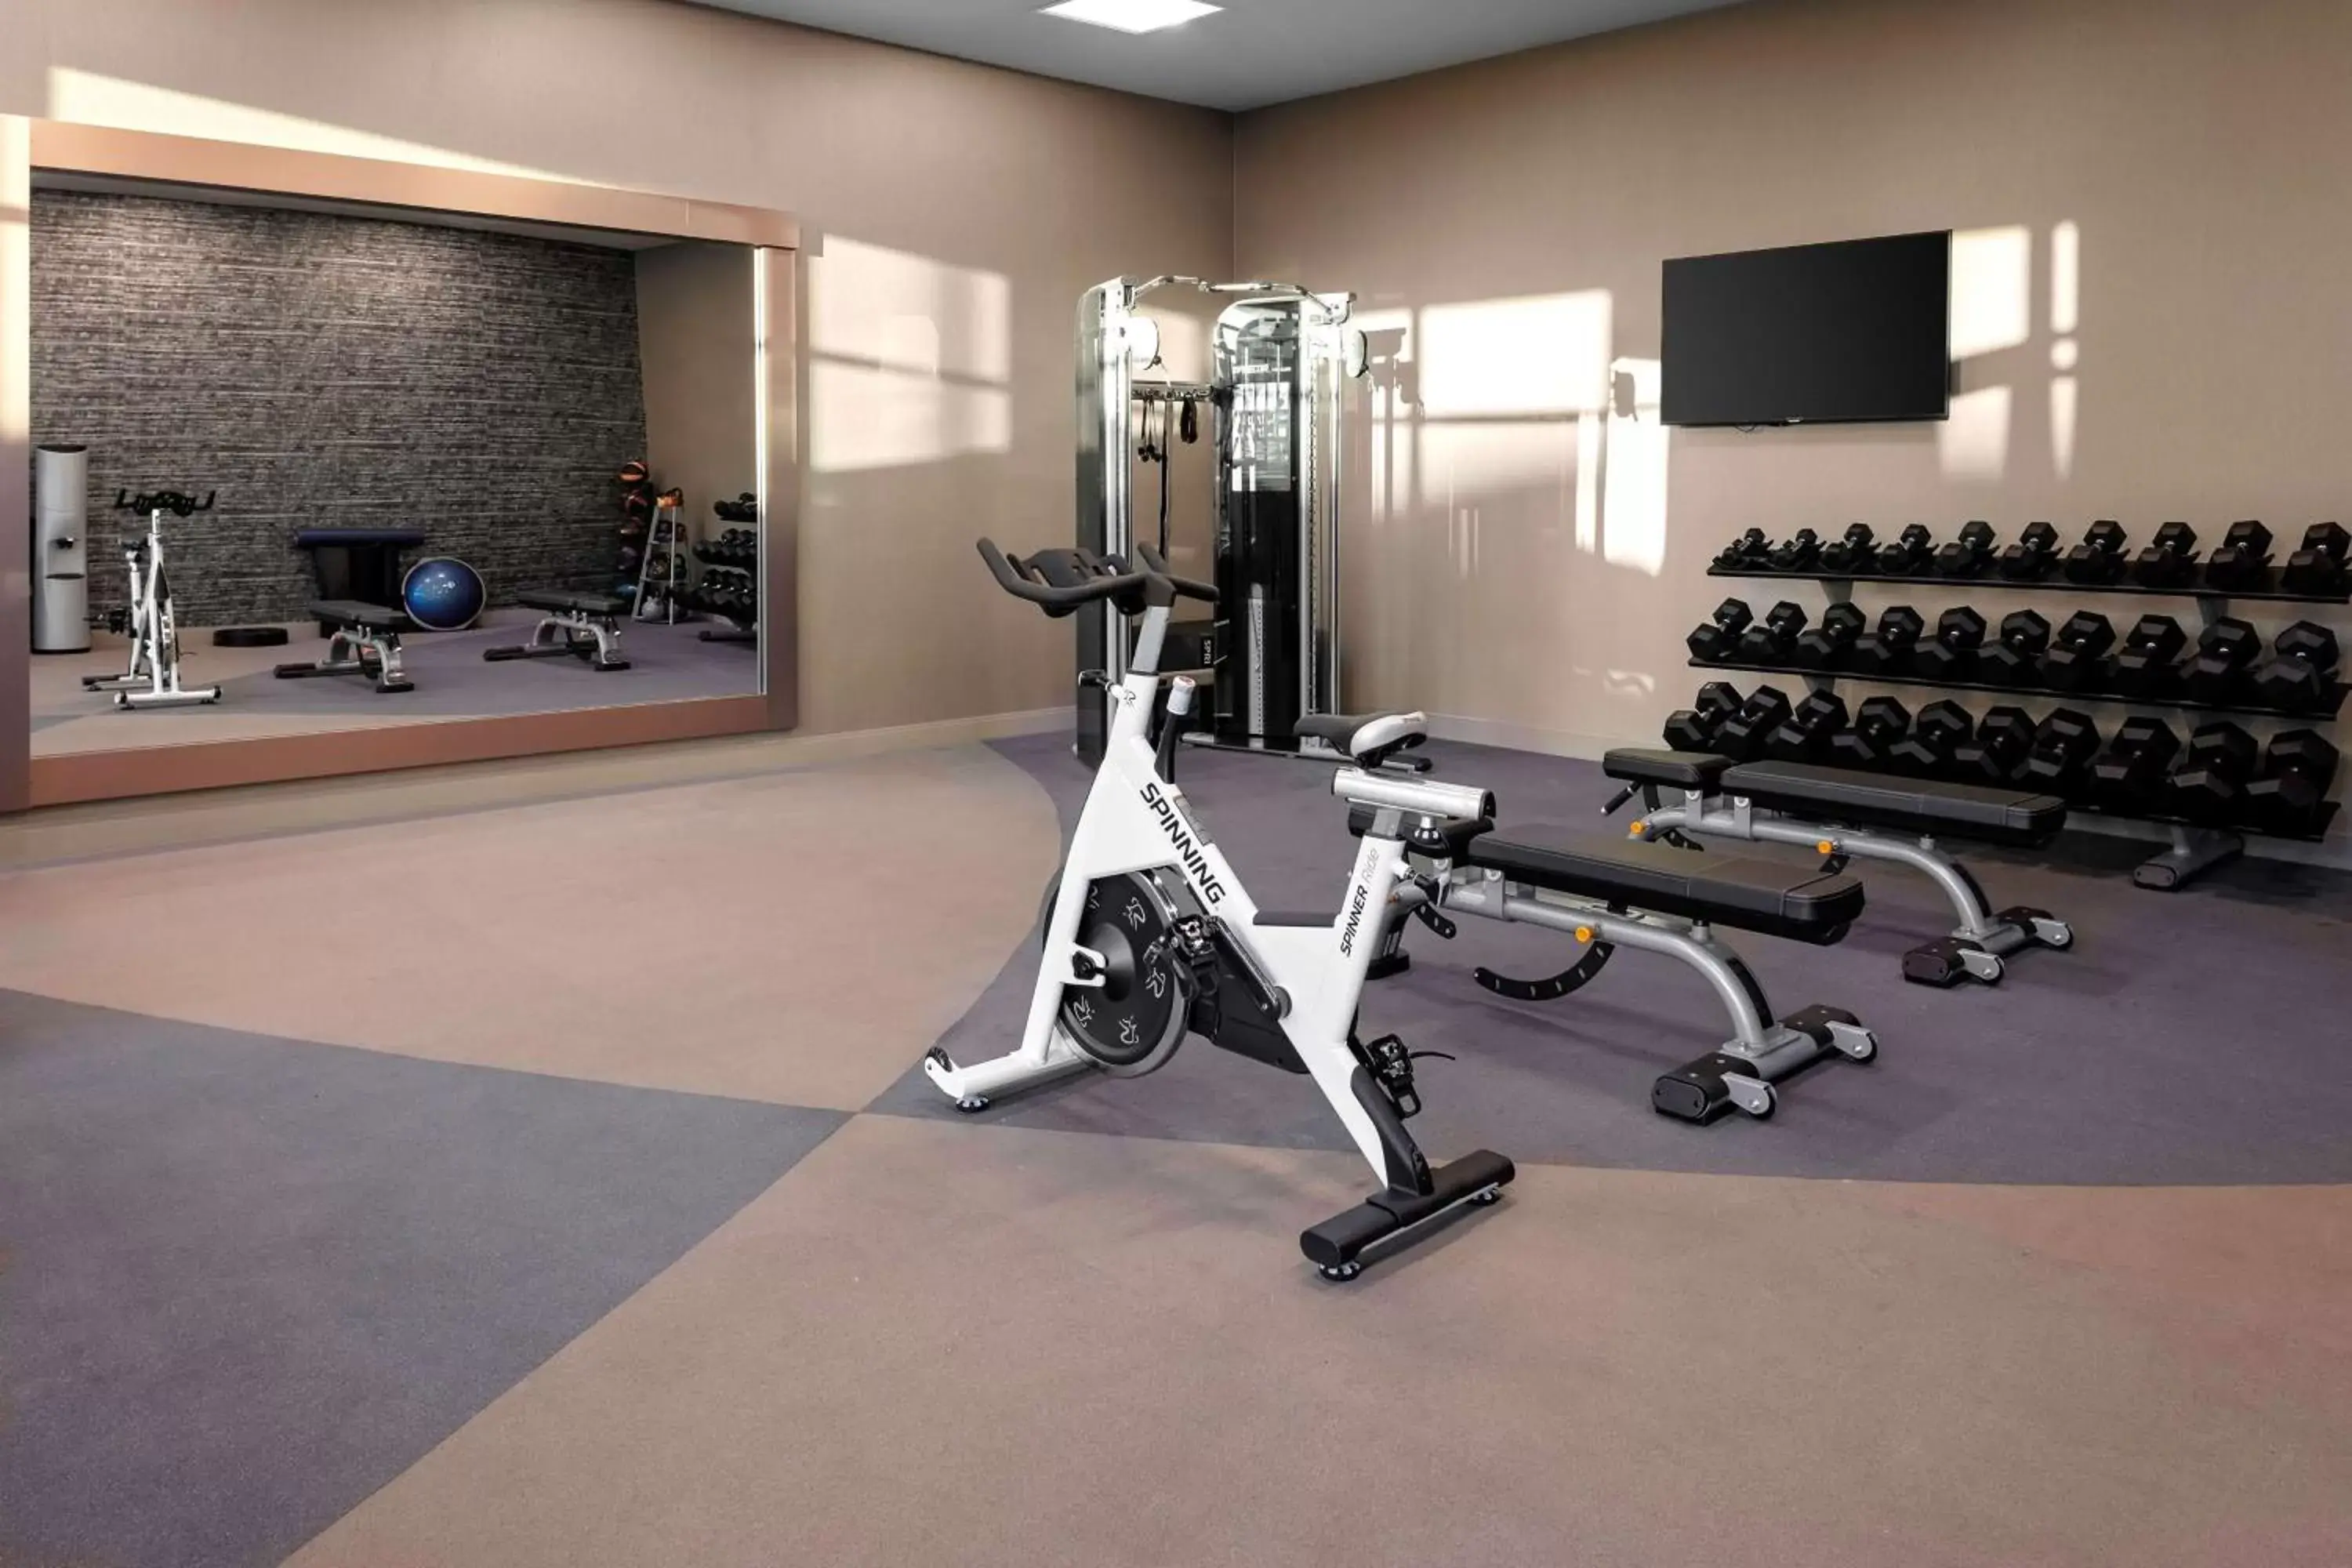 Fitness centre/facilities, Fitness Center/Facilities in Hilton Garden Inn Chandler Downtown